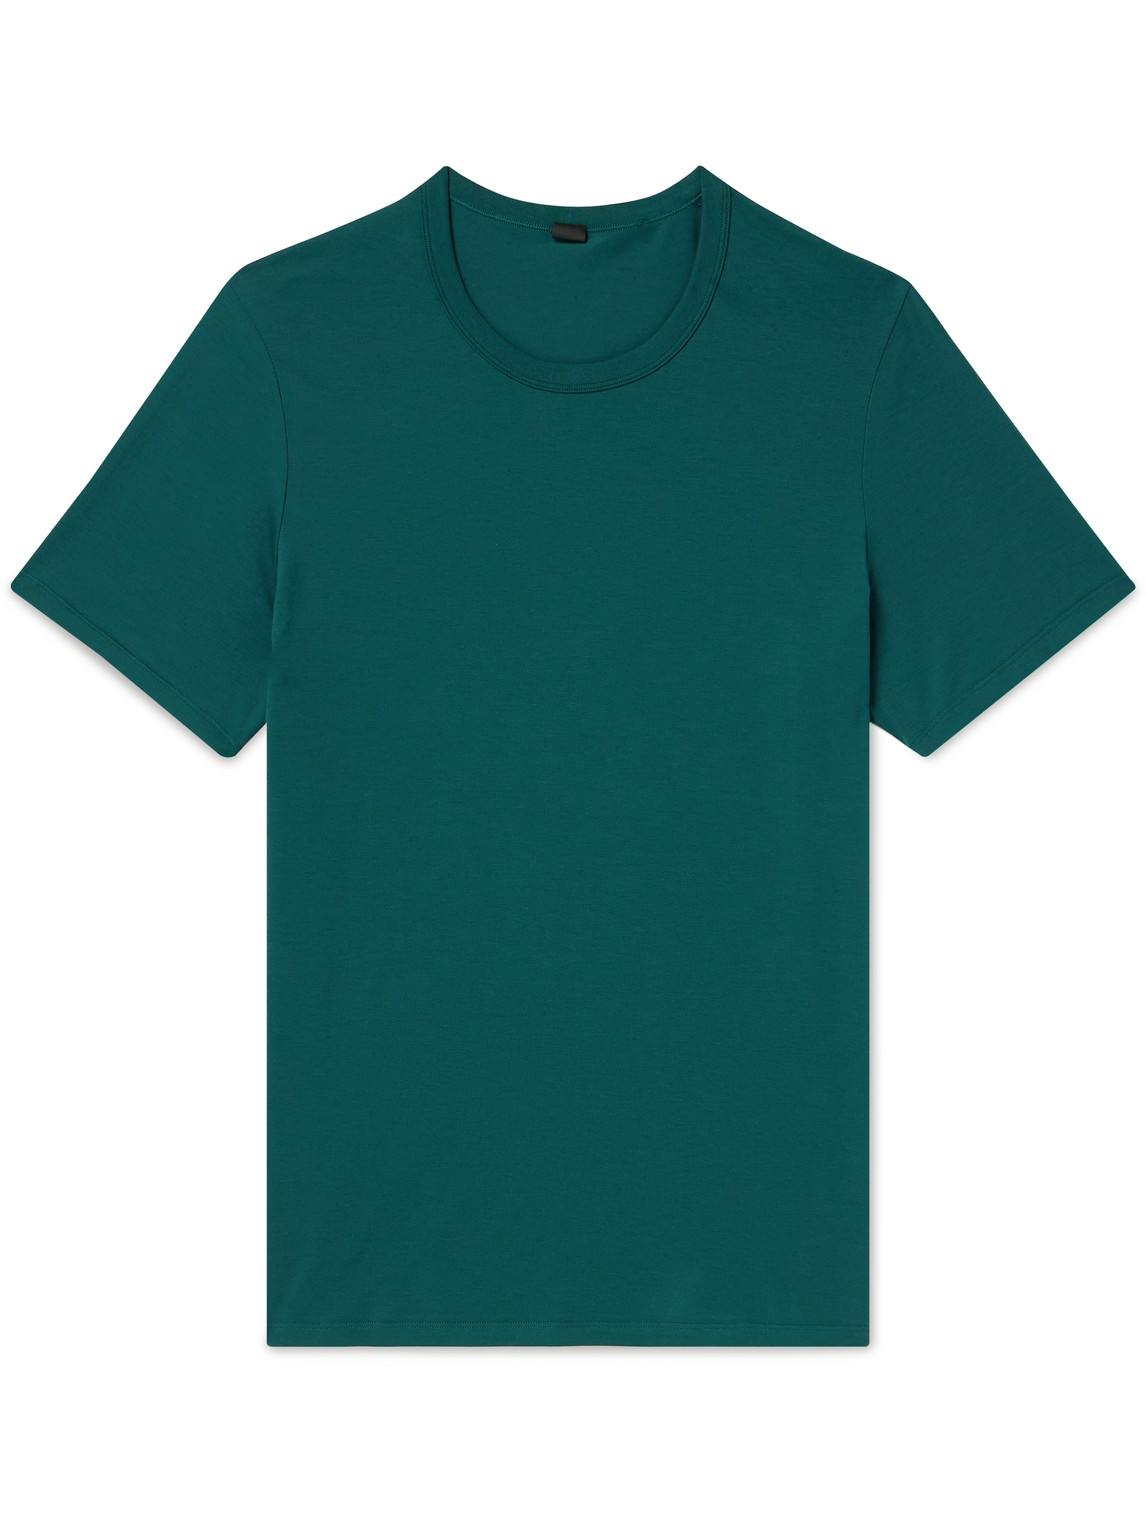 Lululemon The Fundamental Jersey T-shirt In Green